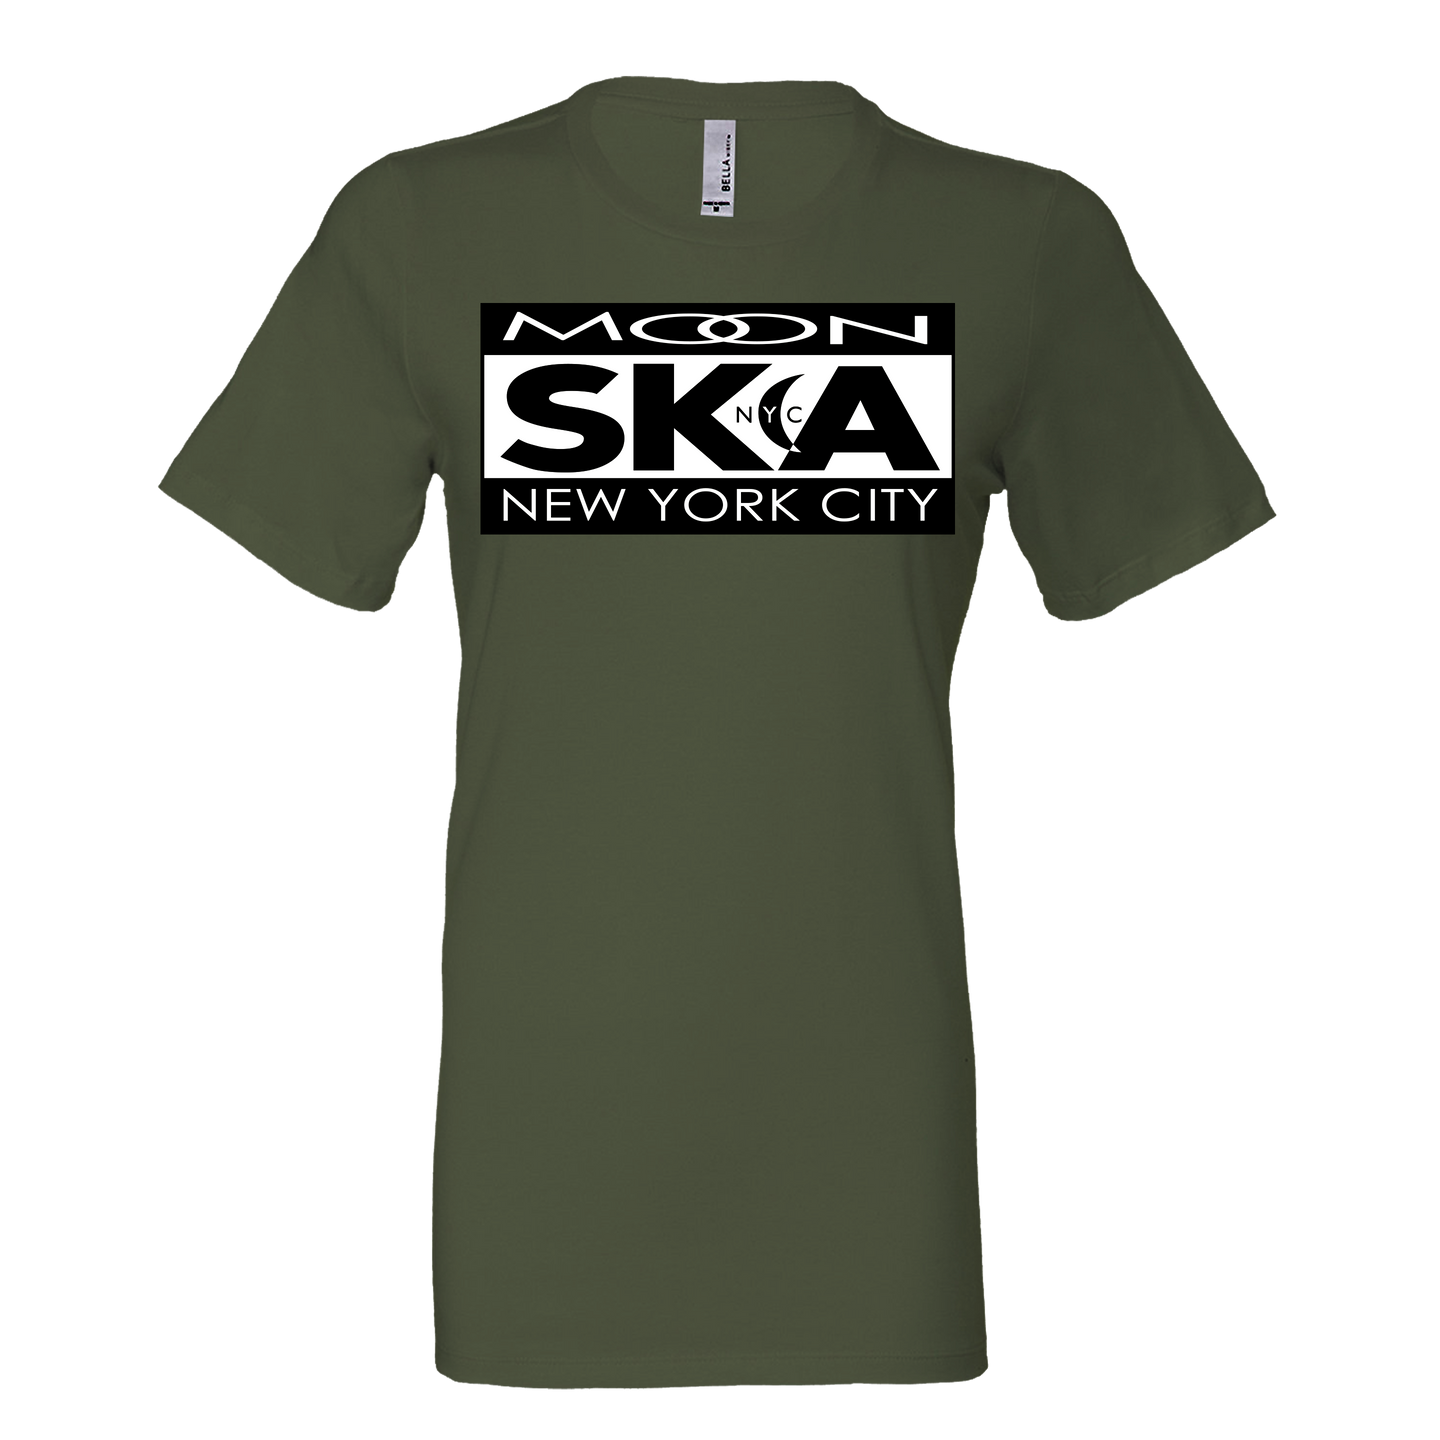 Moon Ska Logo Ladies Shirt - Military Green